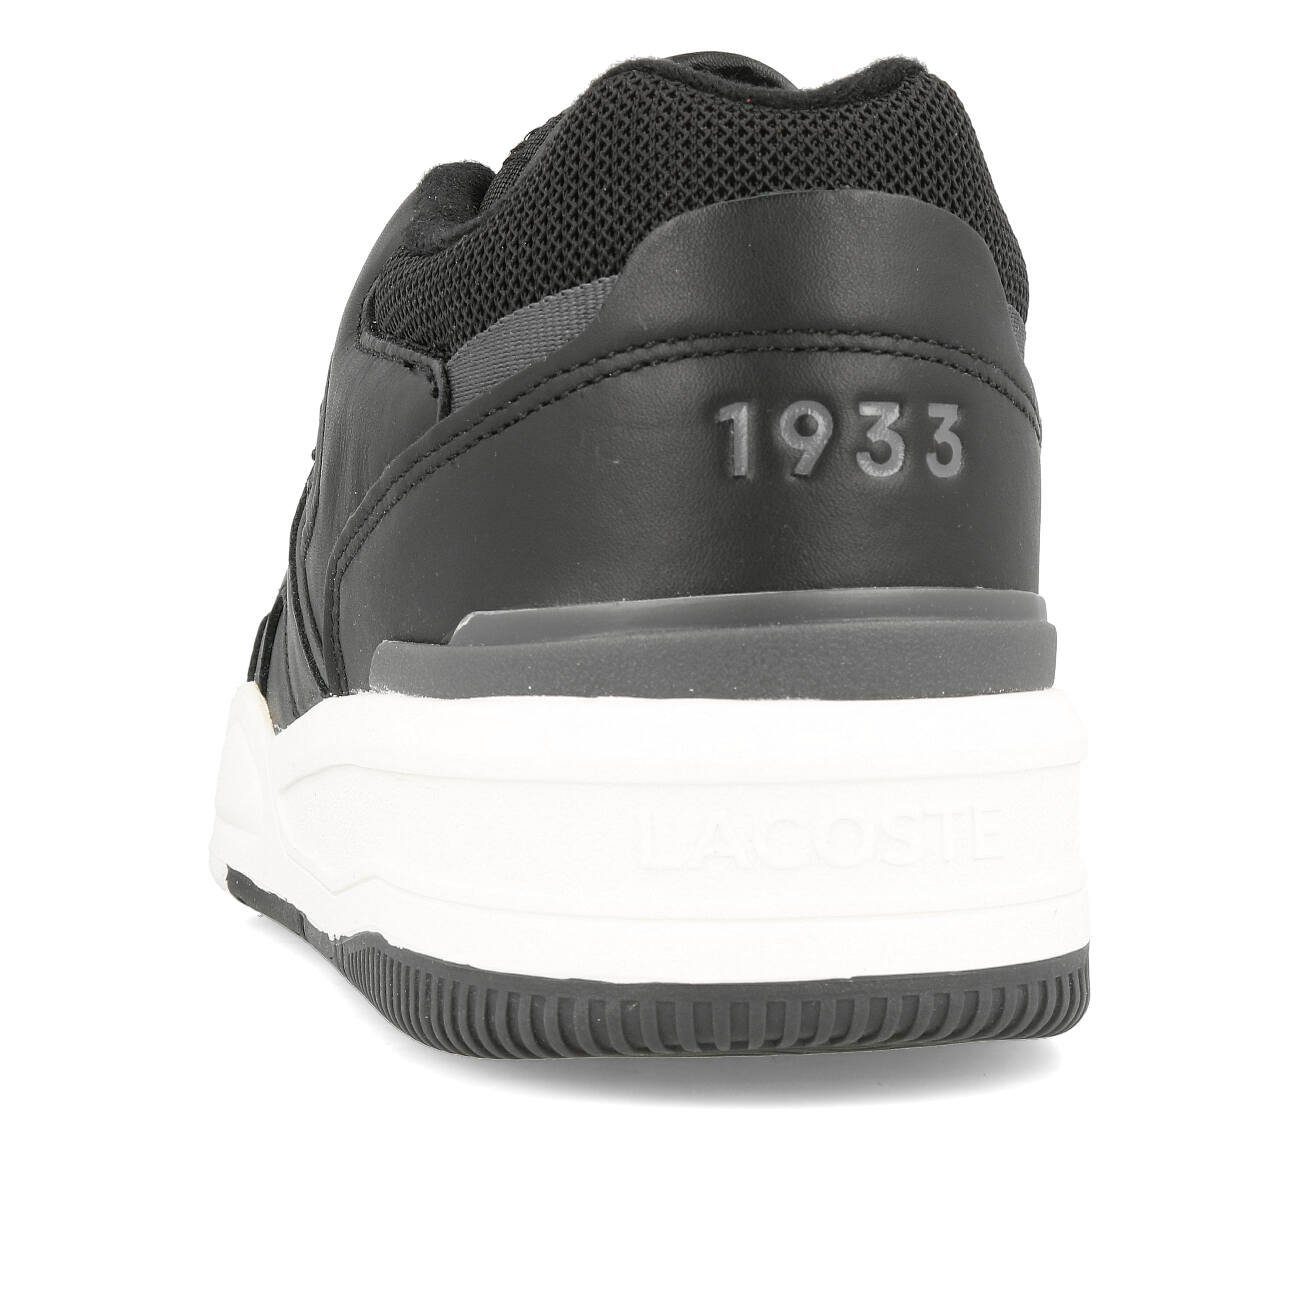 1 223 Lineshot Herren SMA Lacoste Dark Black Sneaker Grey Lacoste